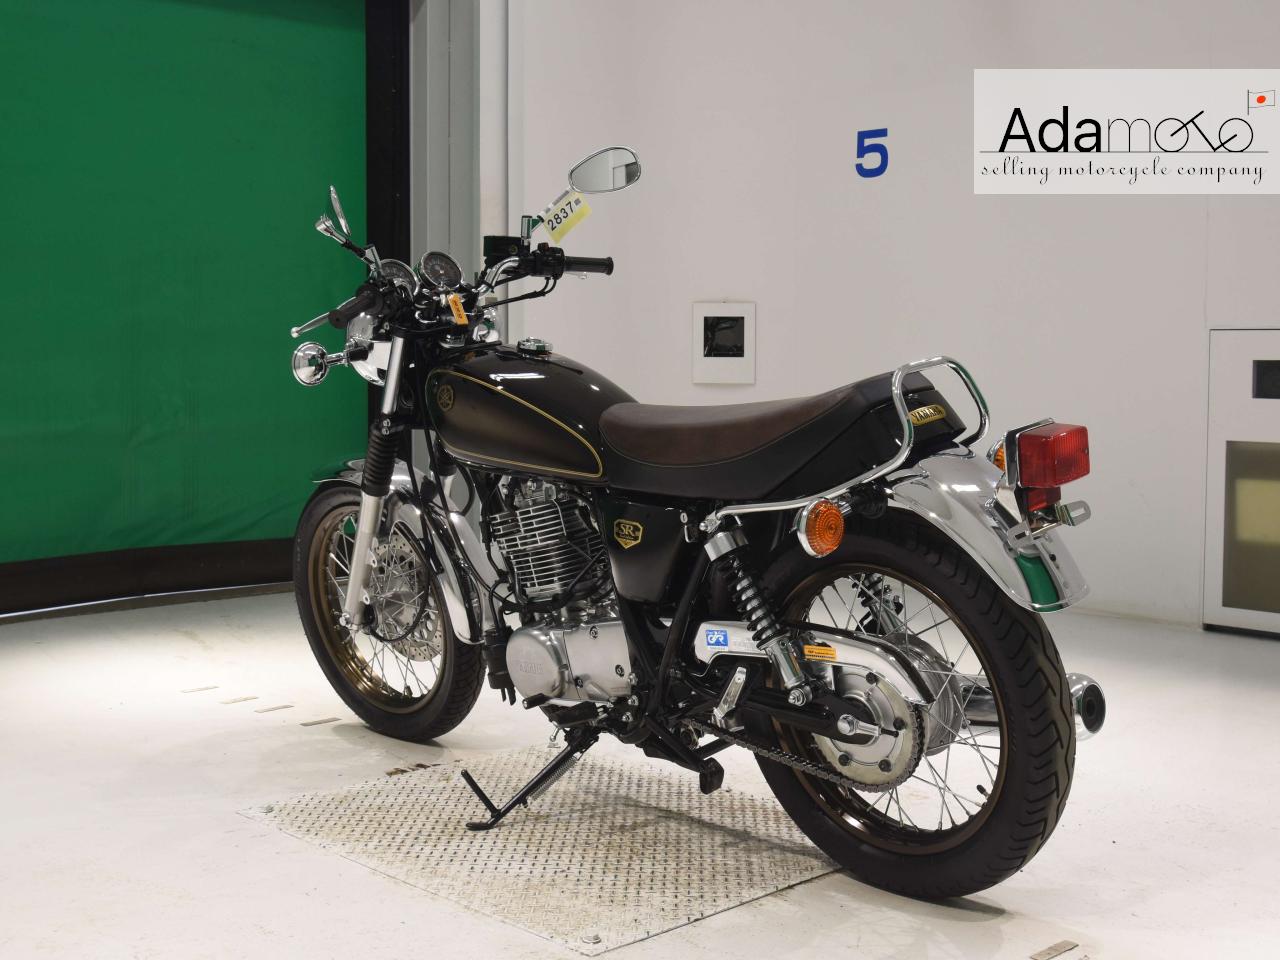 Yamaha SR400-5 - Adamoto - Motorcycles from Japan